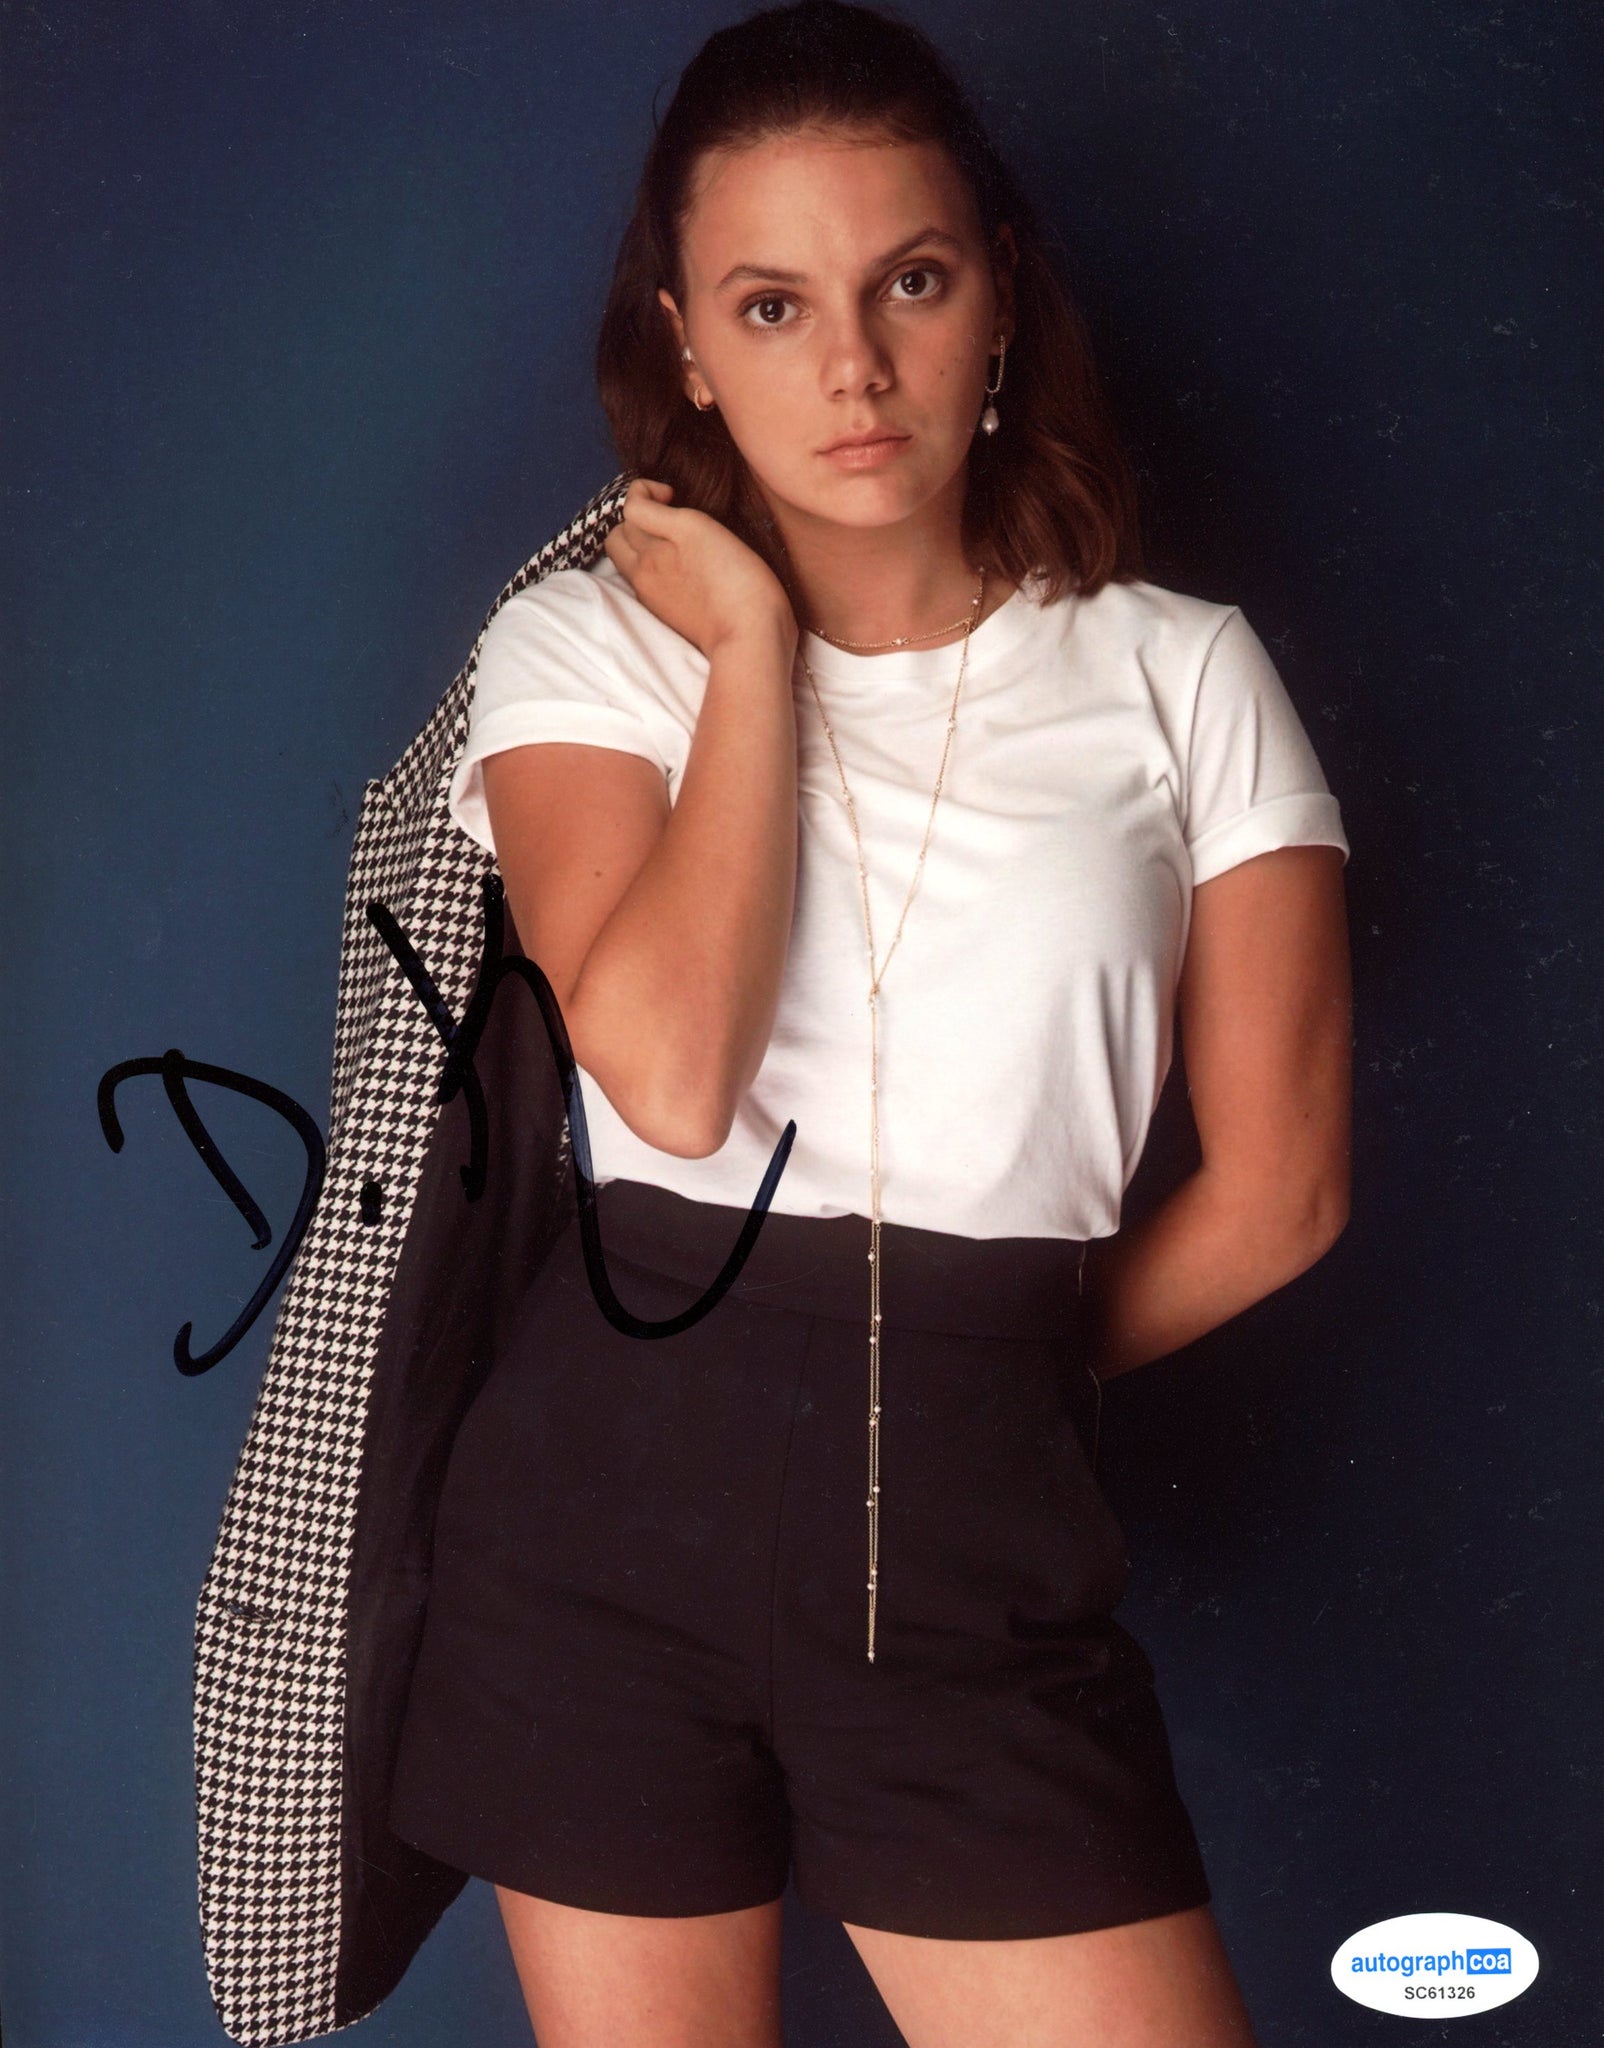 Dafne Keen Signed Autograph 8x10 Photo ACOA